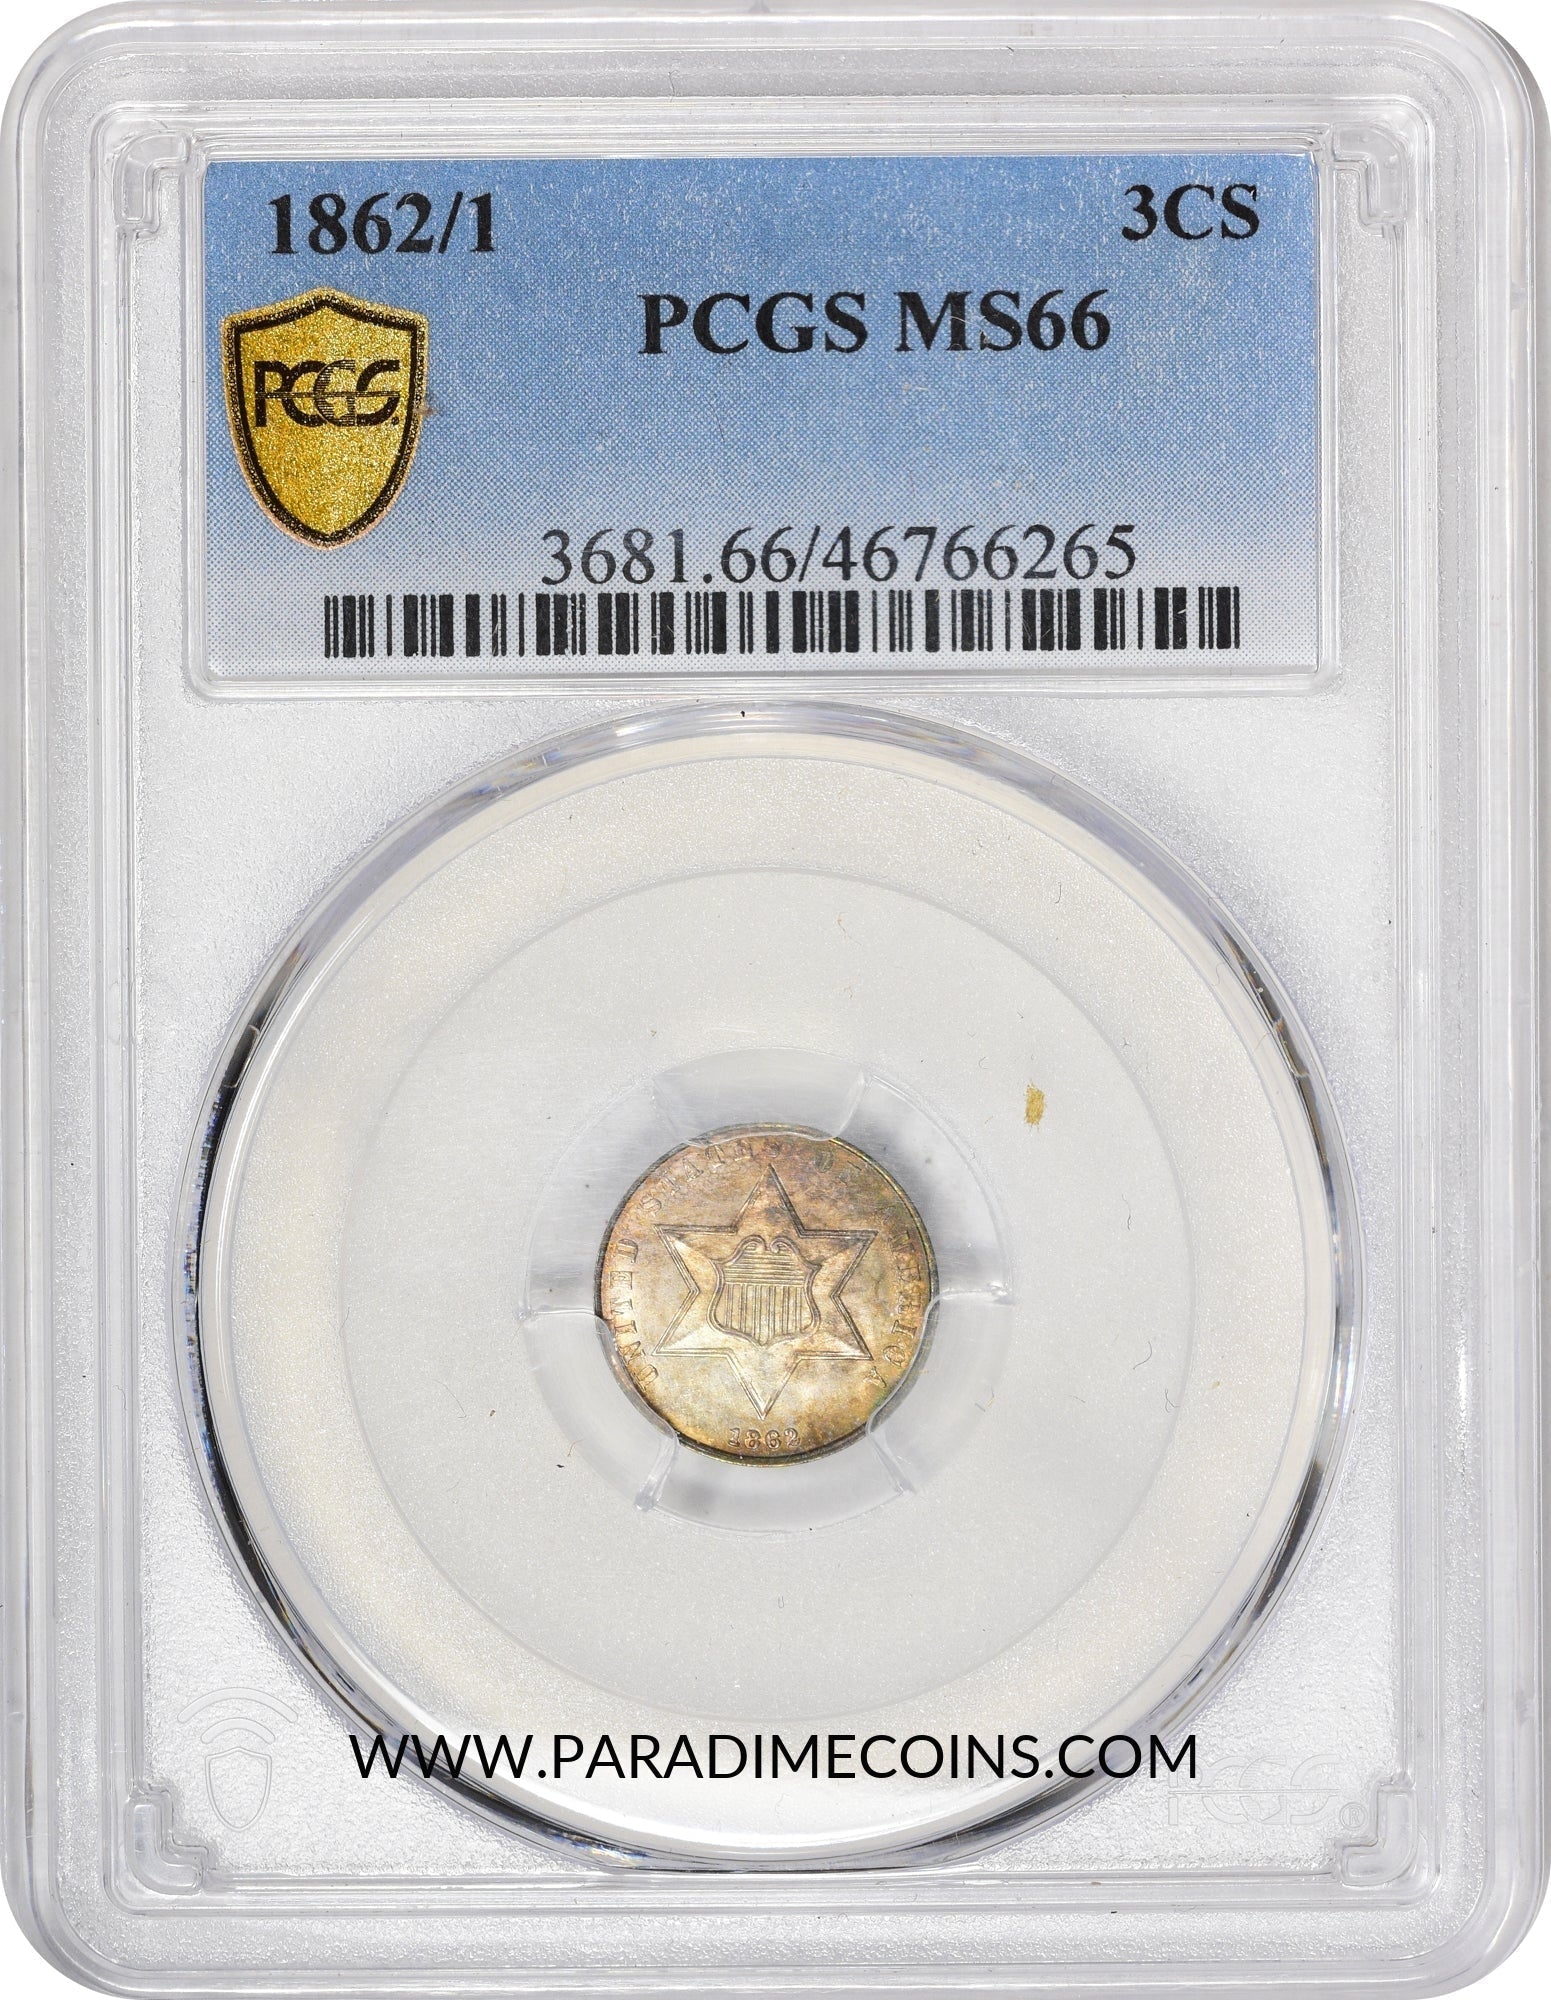 1862/1 3CS MS66 PCGS - Paradime Coins | PCGS NGC CACG CAC Rare US Numismatic Coins For Sale